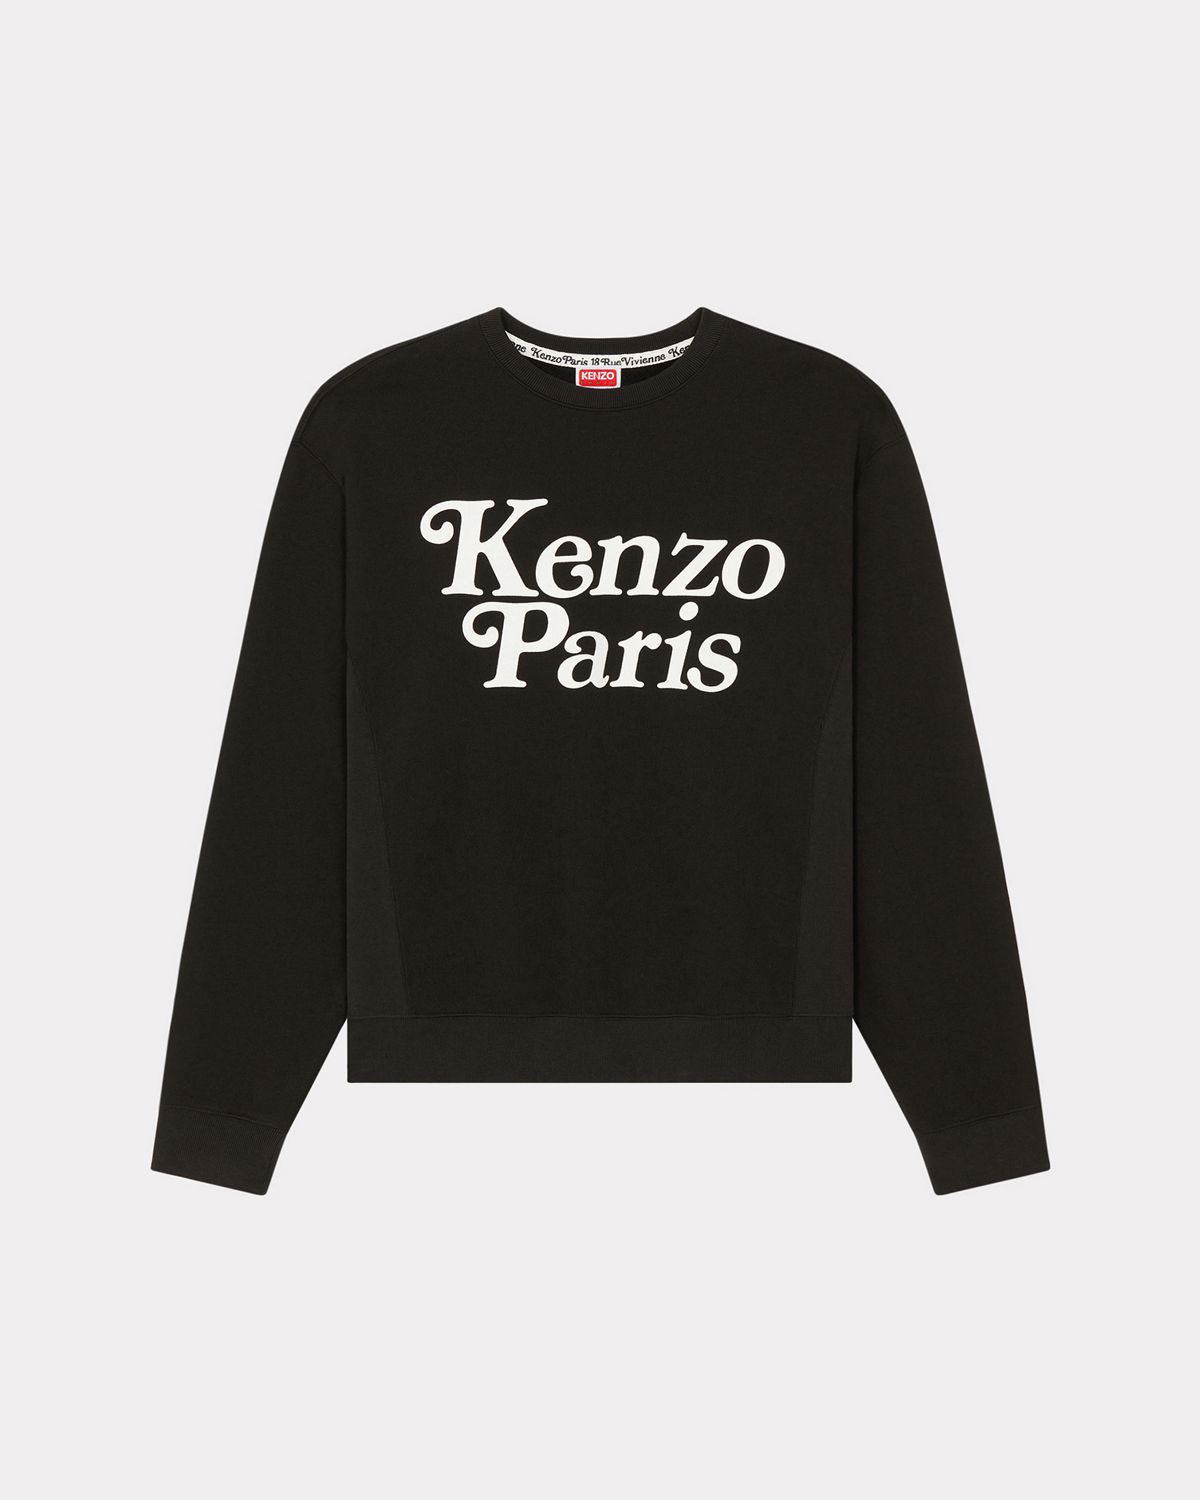 KENZO - 【残りわずか】【限定】 KENZO x VERDY / KENZO BY 